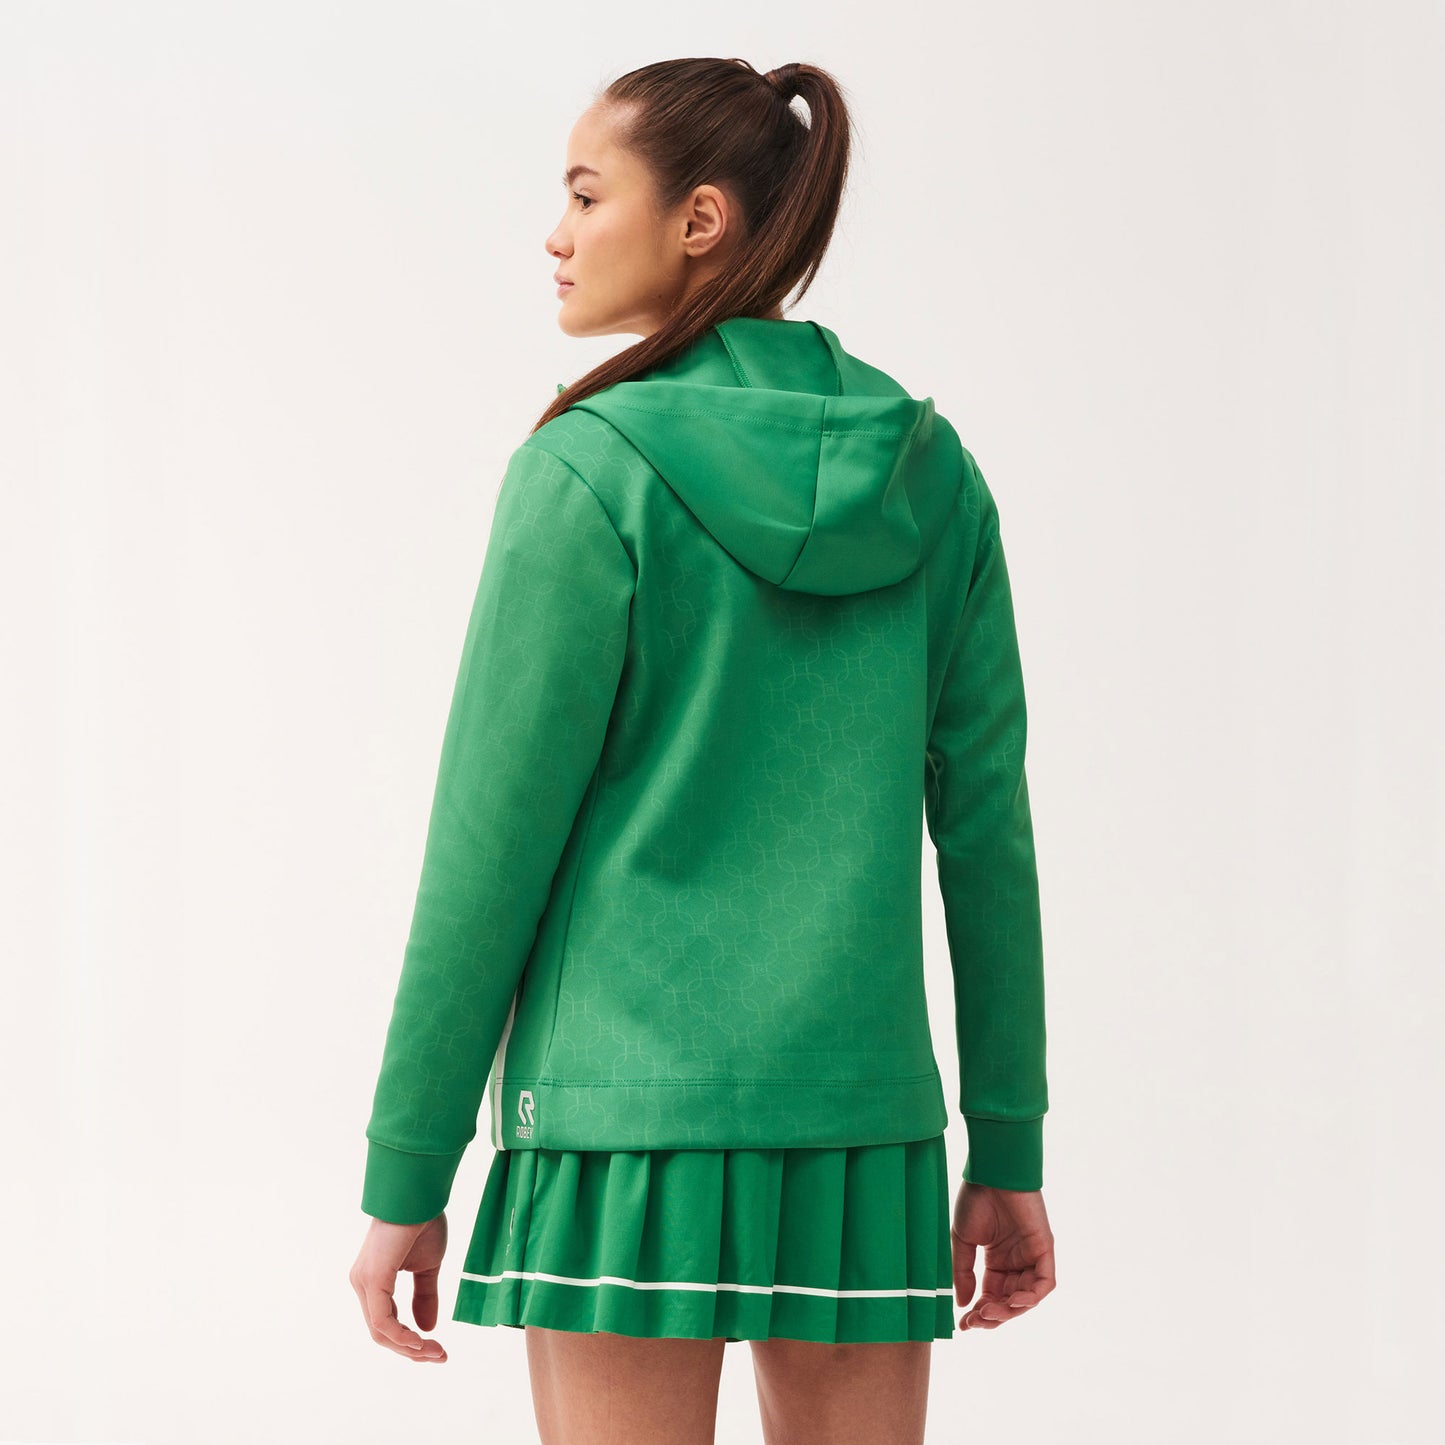 Robey Forehand Women's Full-Zip Tennis Jacket Green (2)